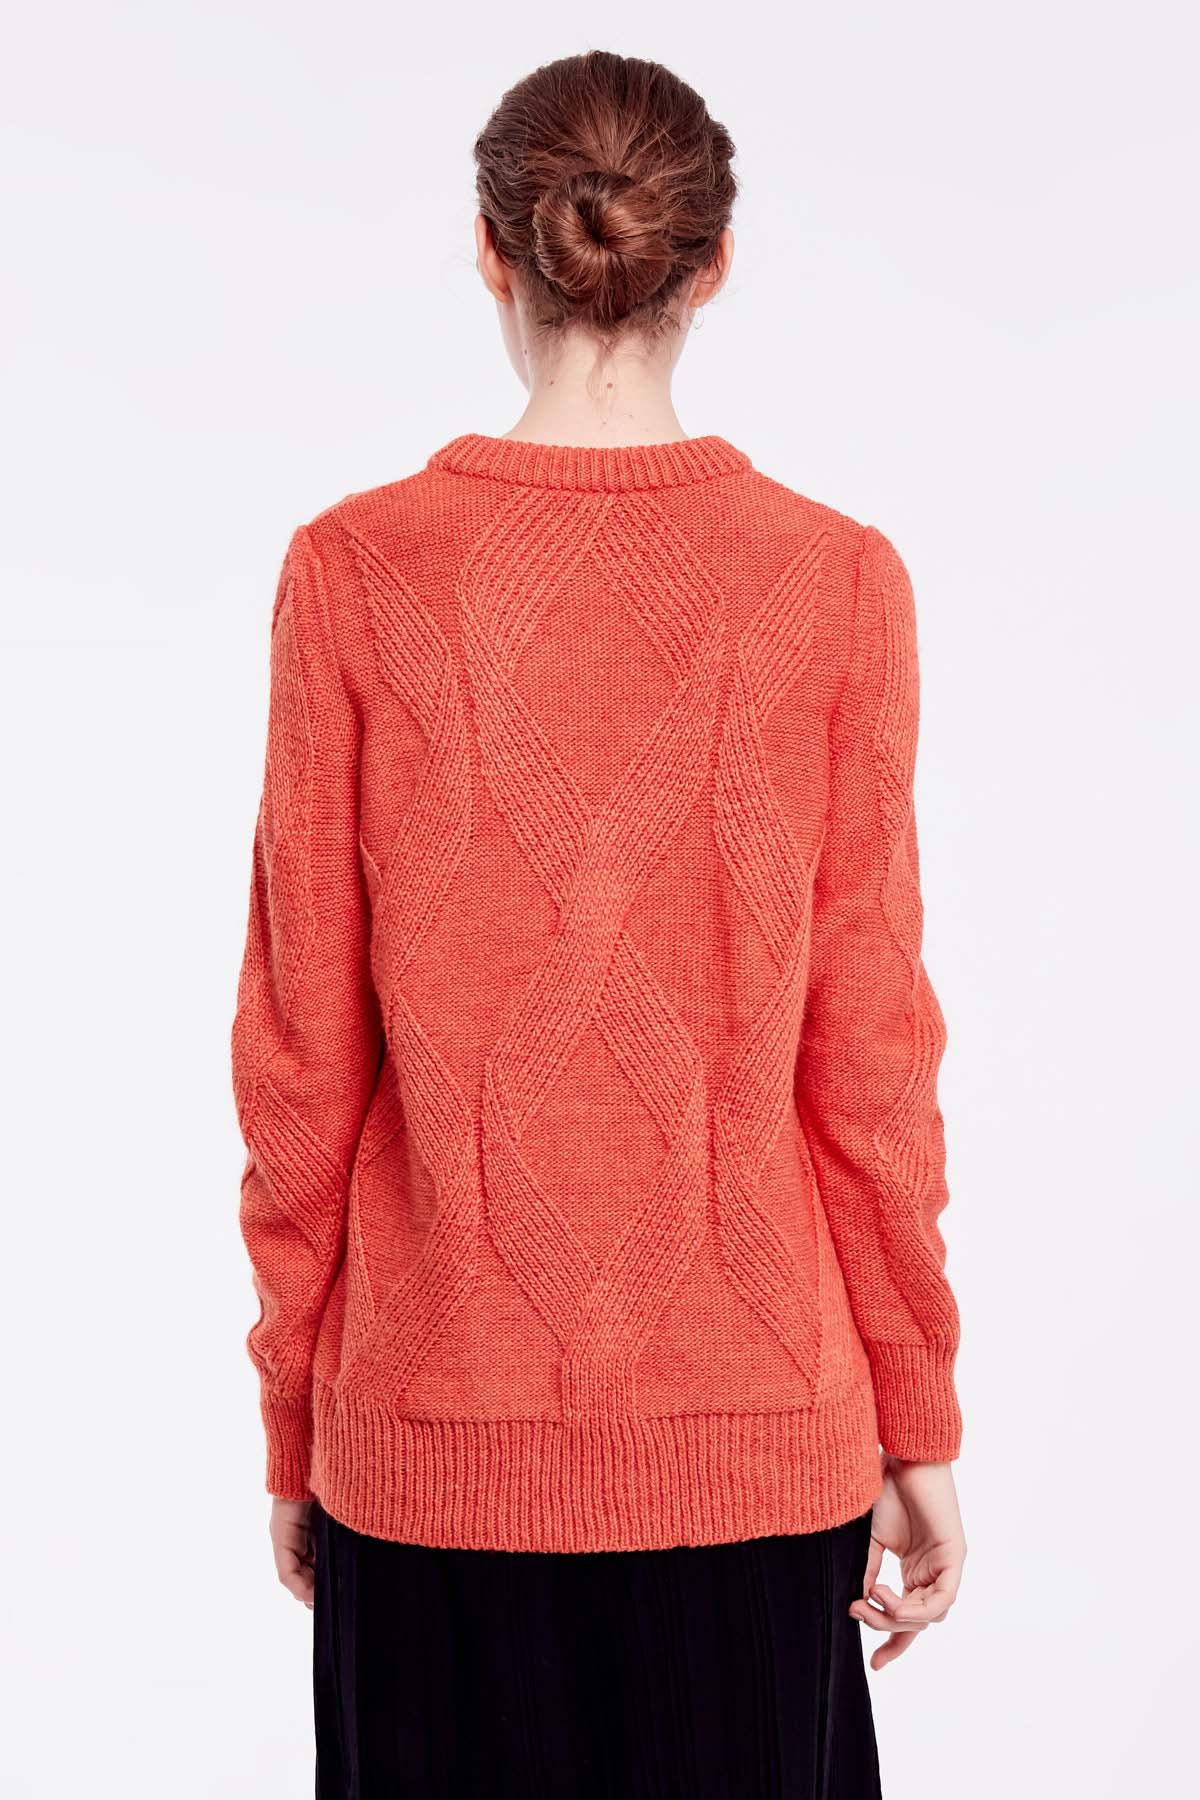 Orange free knit sweater, photo 4